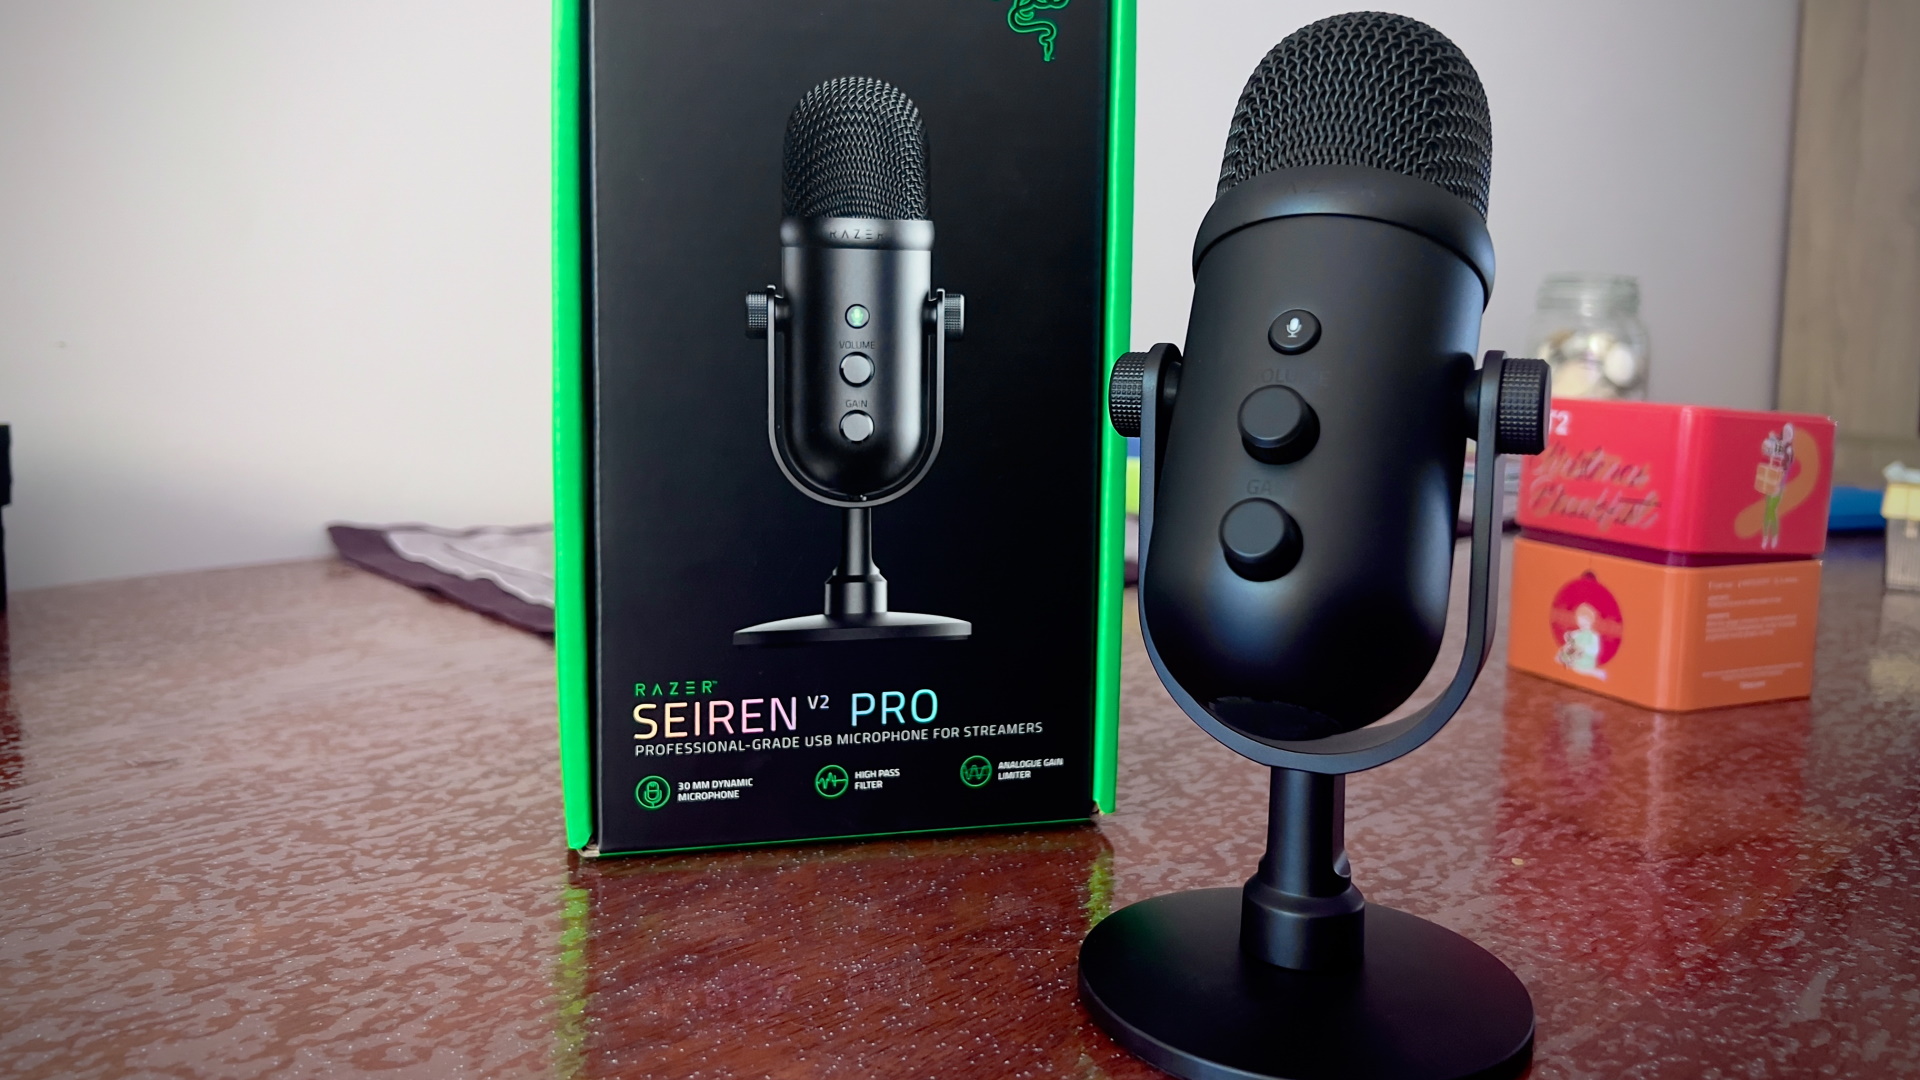 Razer Seiren V2 Pro microphone review | PC Gamer